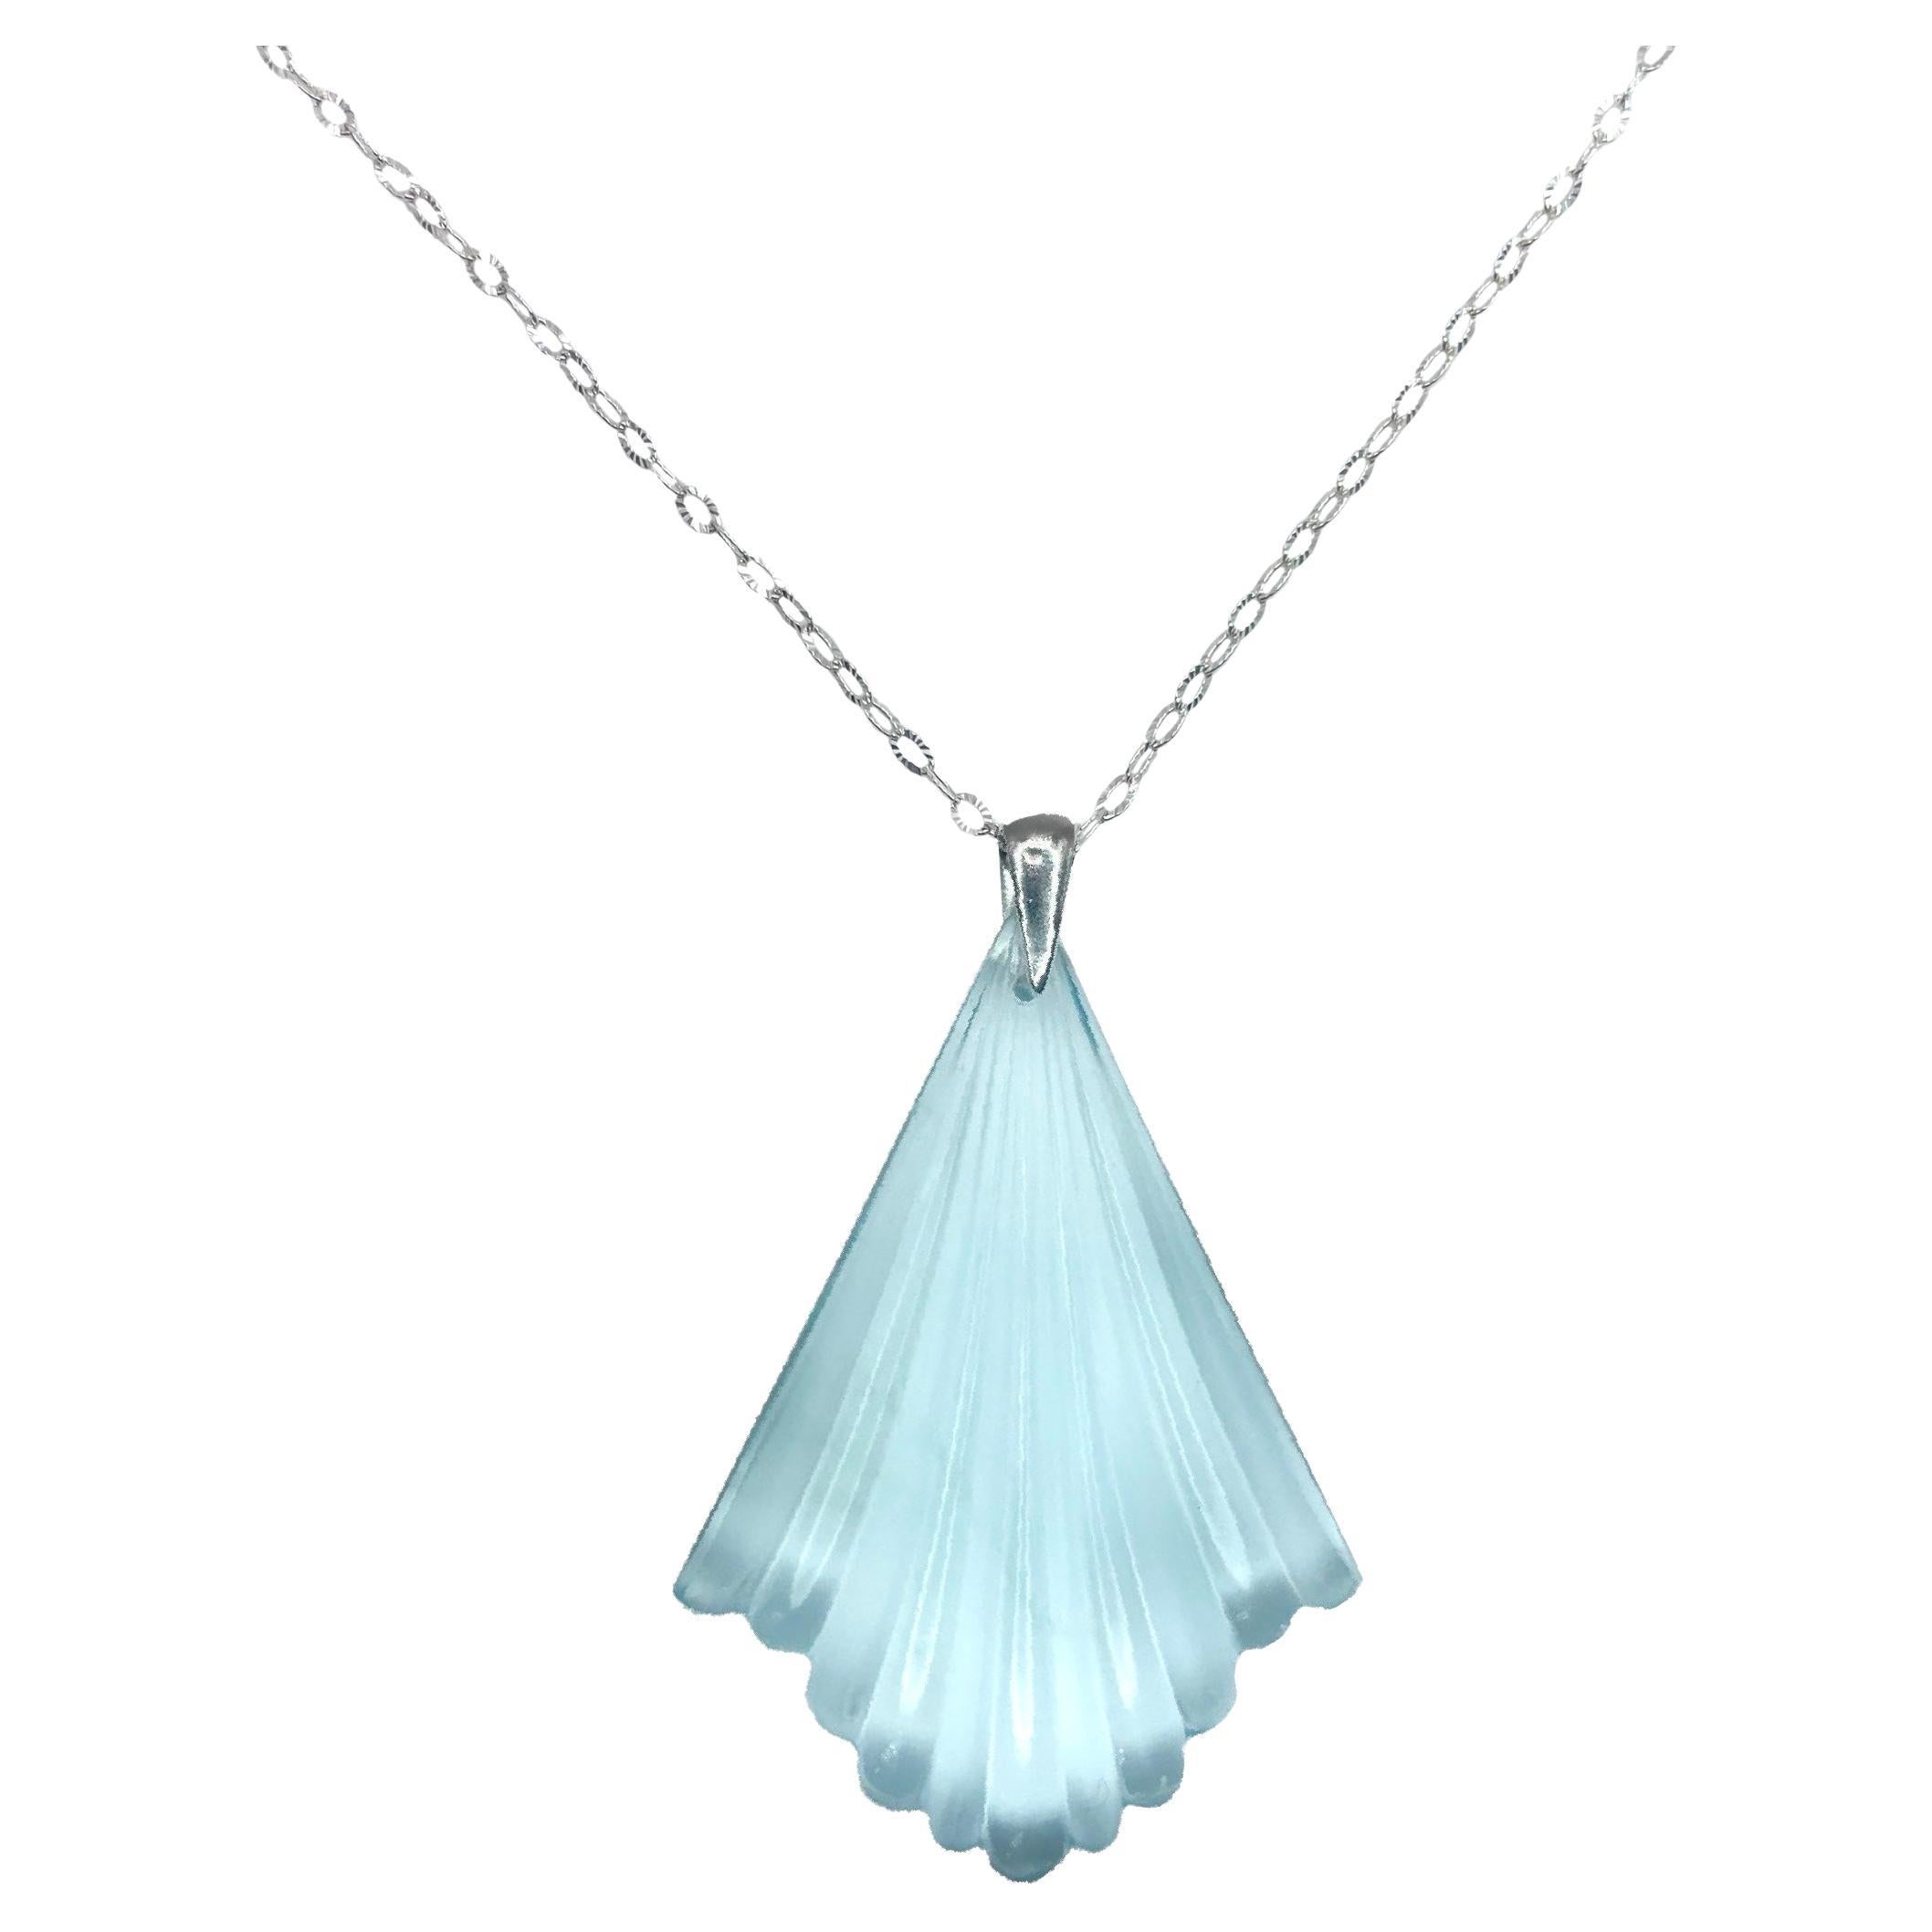 PONTIEL Art Deco Aqua Glass Fan with Sterling Silver Chain Pendant Necklace For Sale